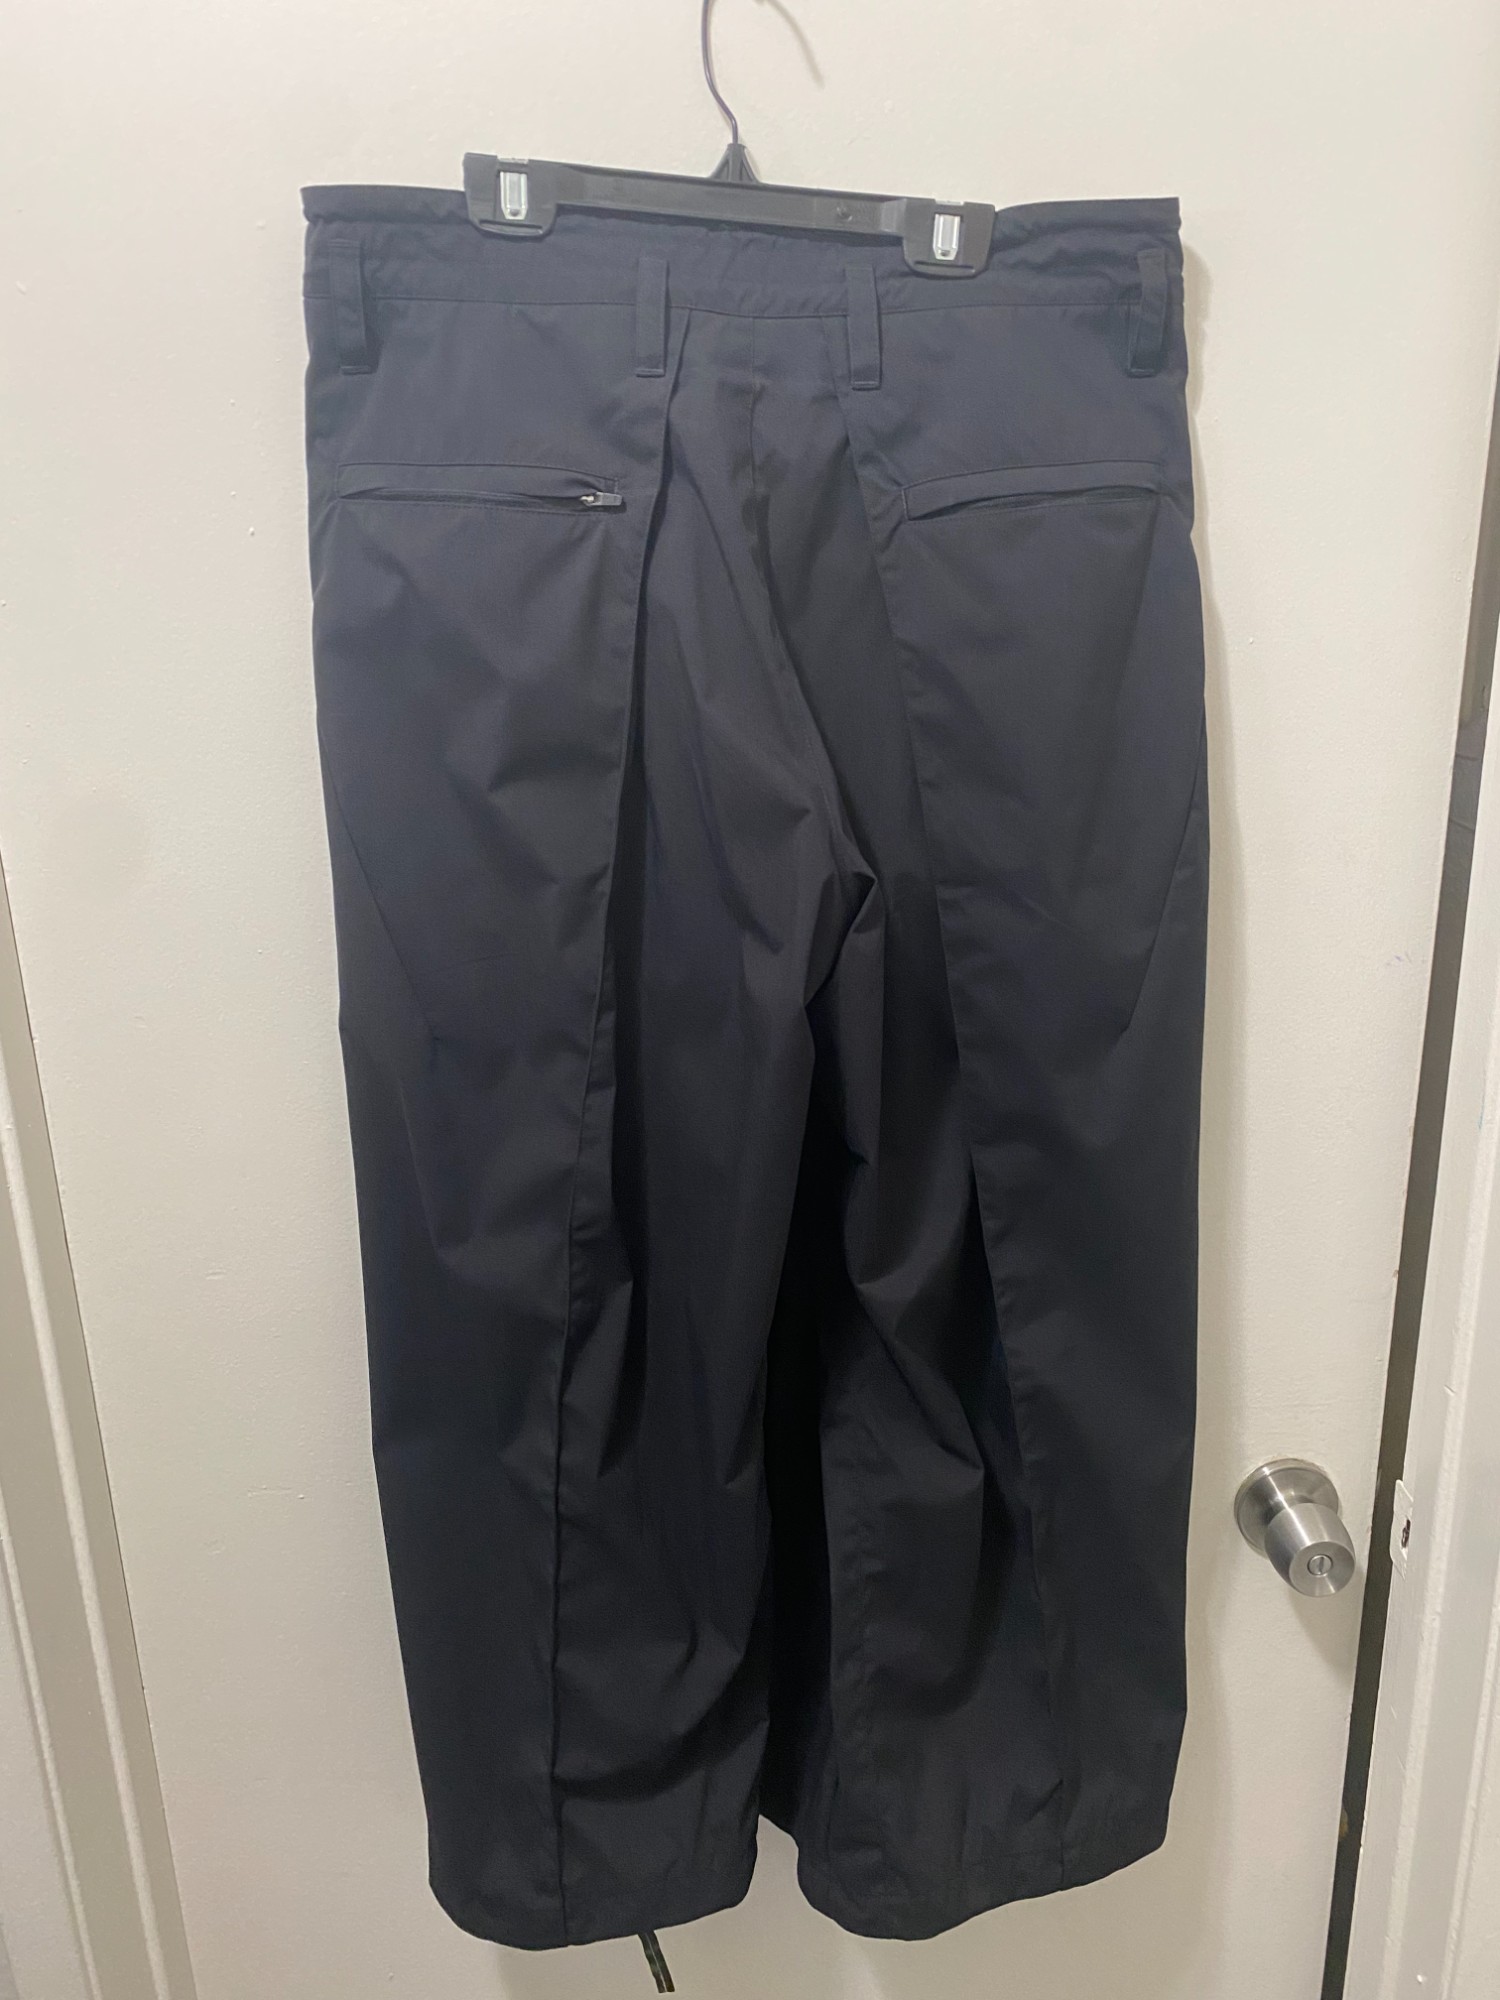 ACRONYM Acronym P54-E Encapsulated Nylon Pleated Trouser | icarusxvii ...